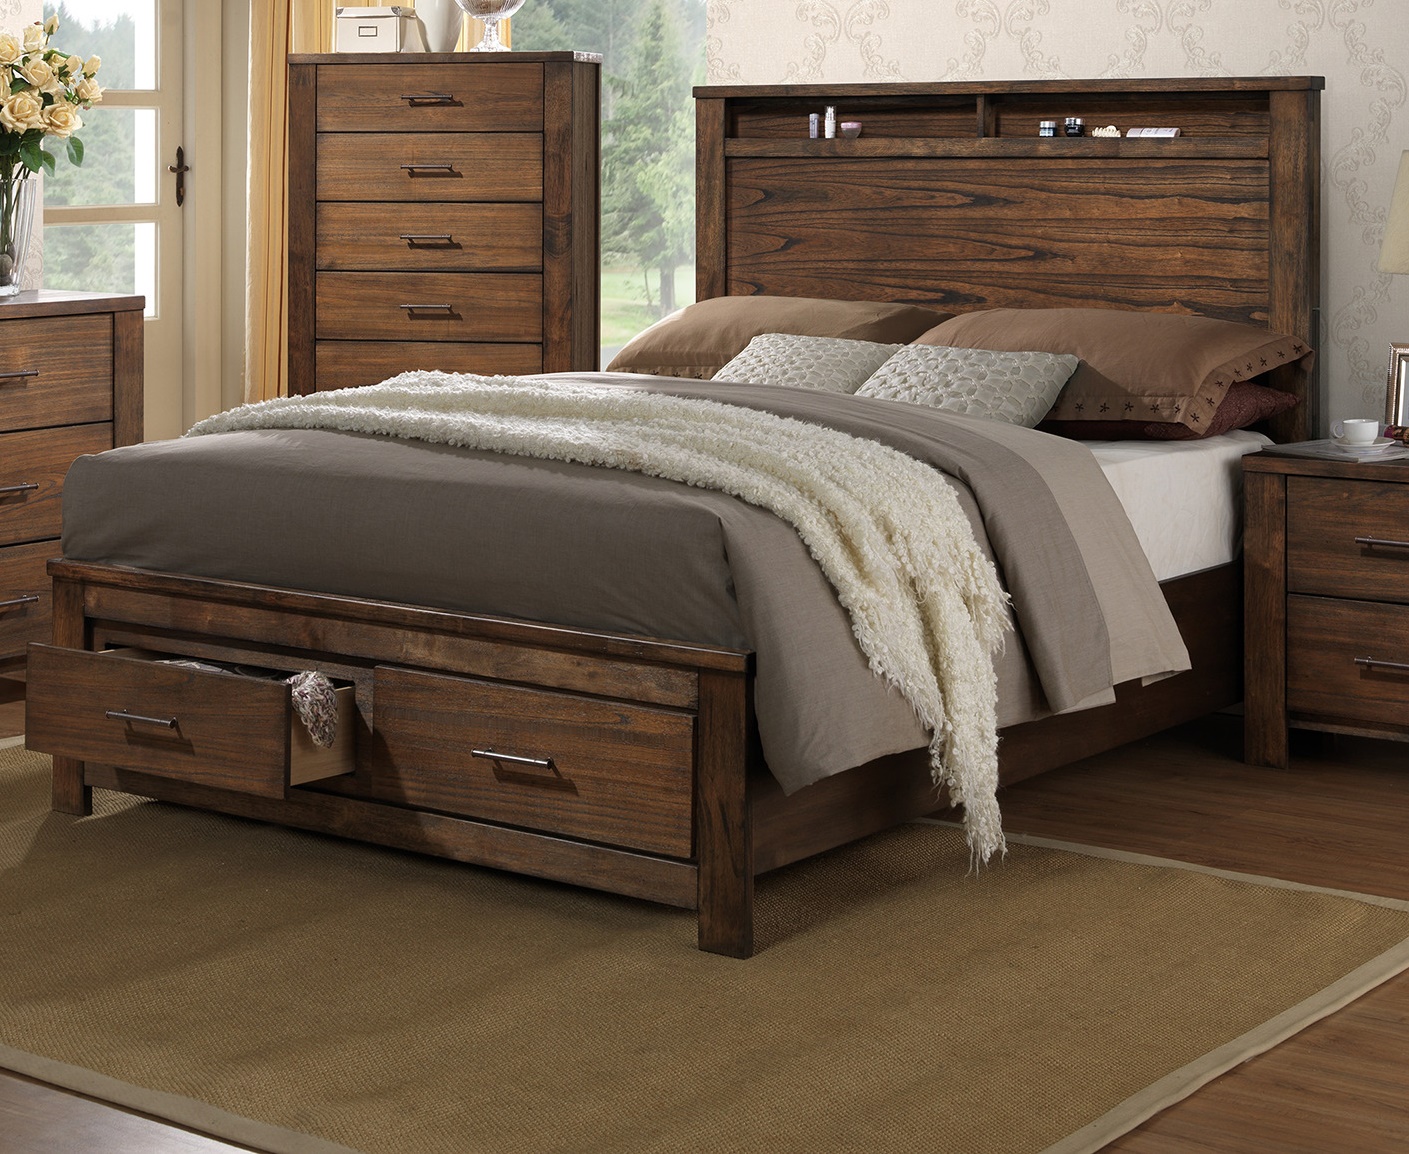 Shelf Hb Bedframe Bedroom Furniture, California King Size Bed Frame With Drawers